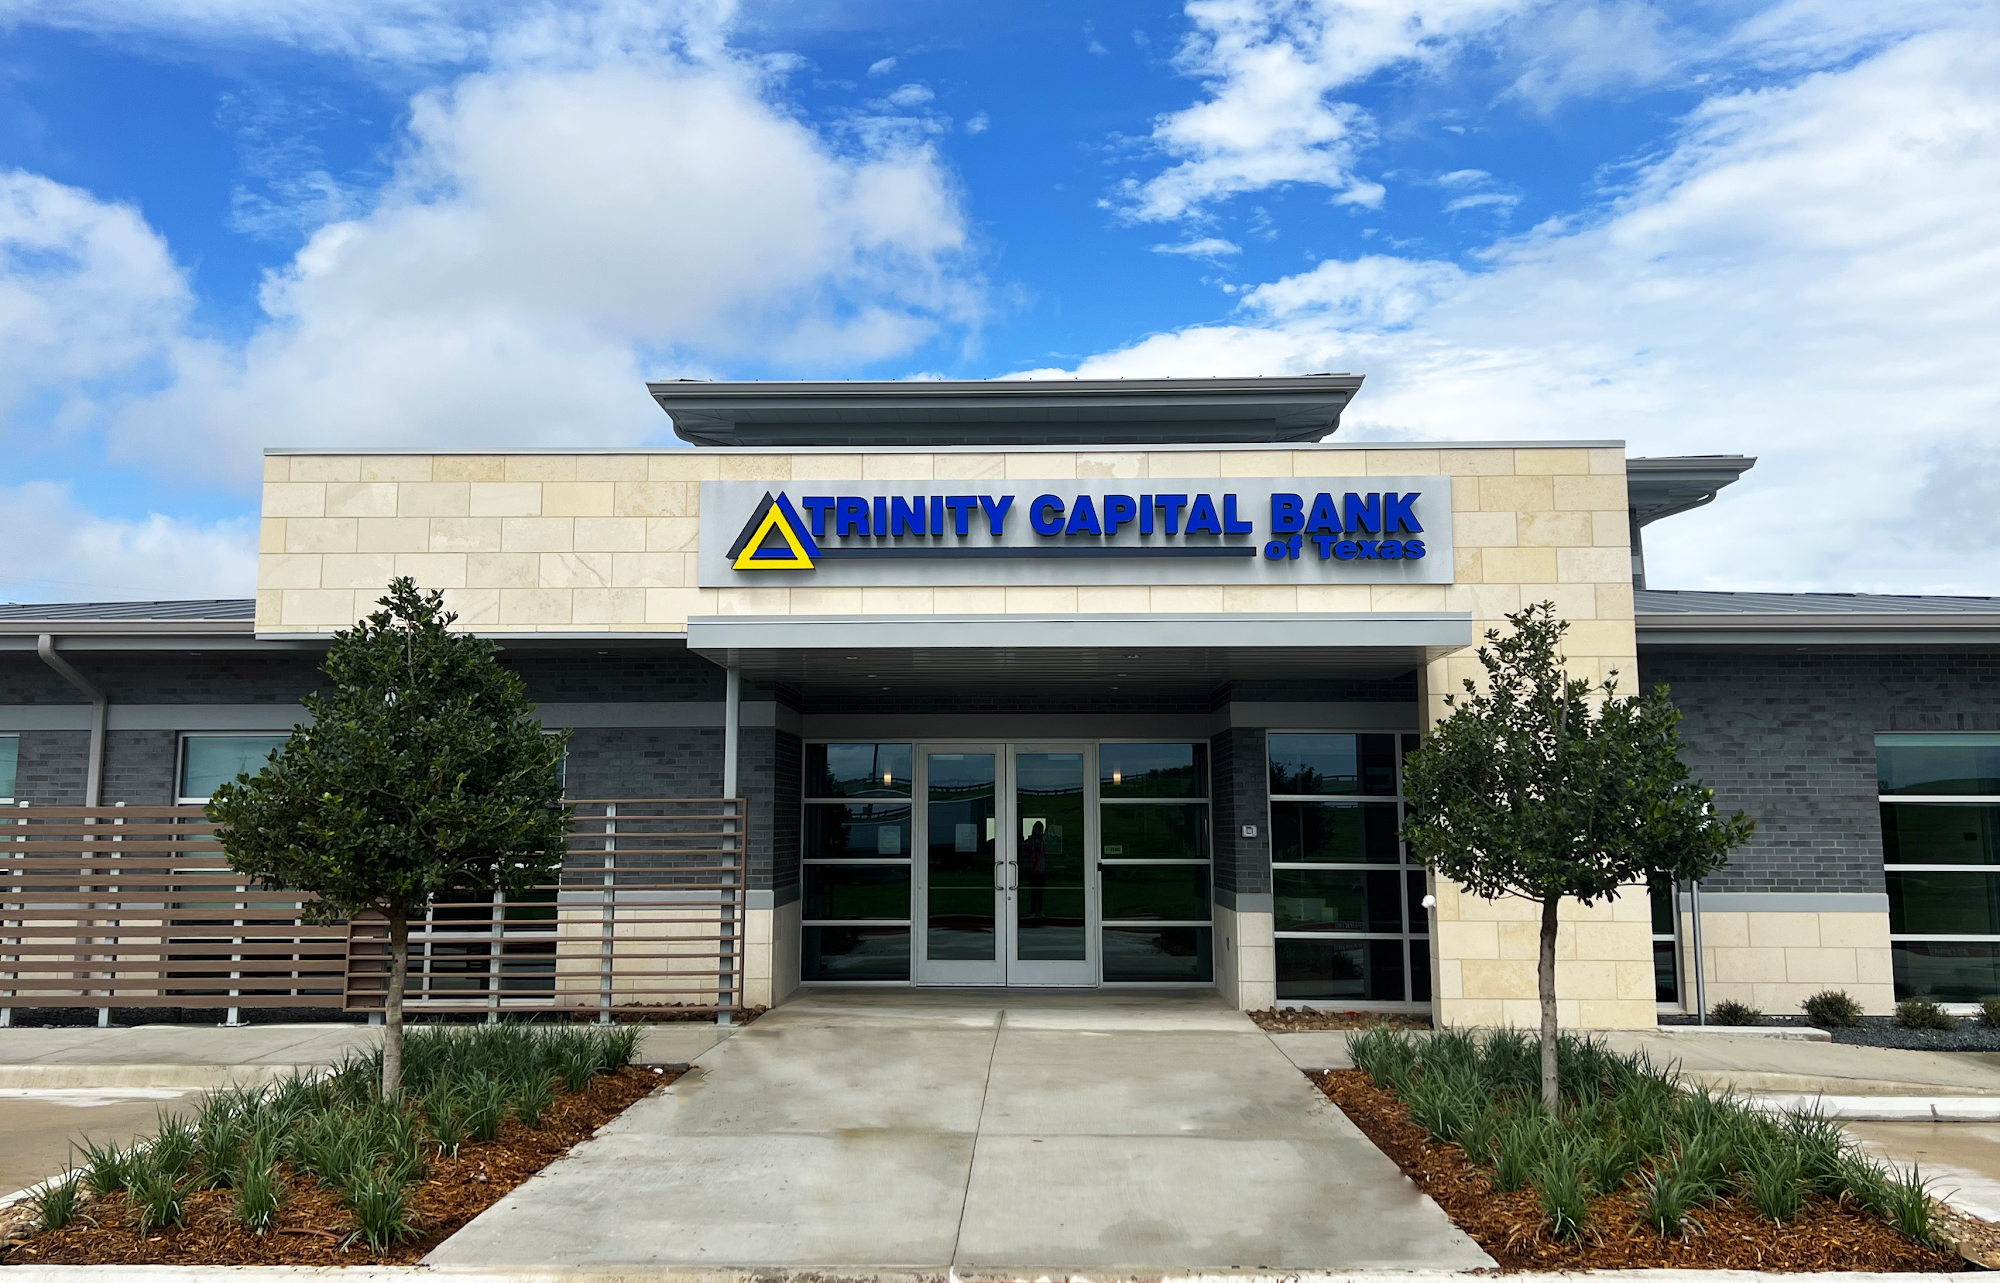 Trinity Capital Bank of Texas